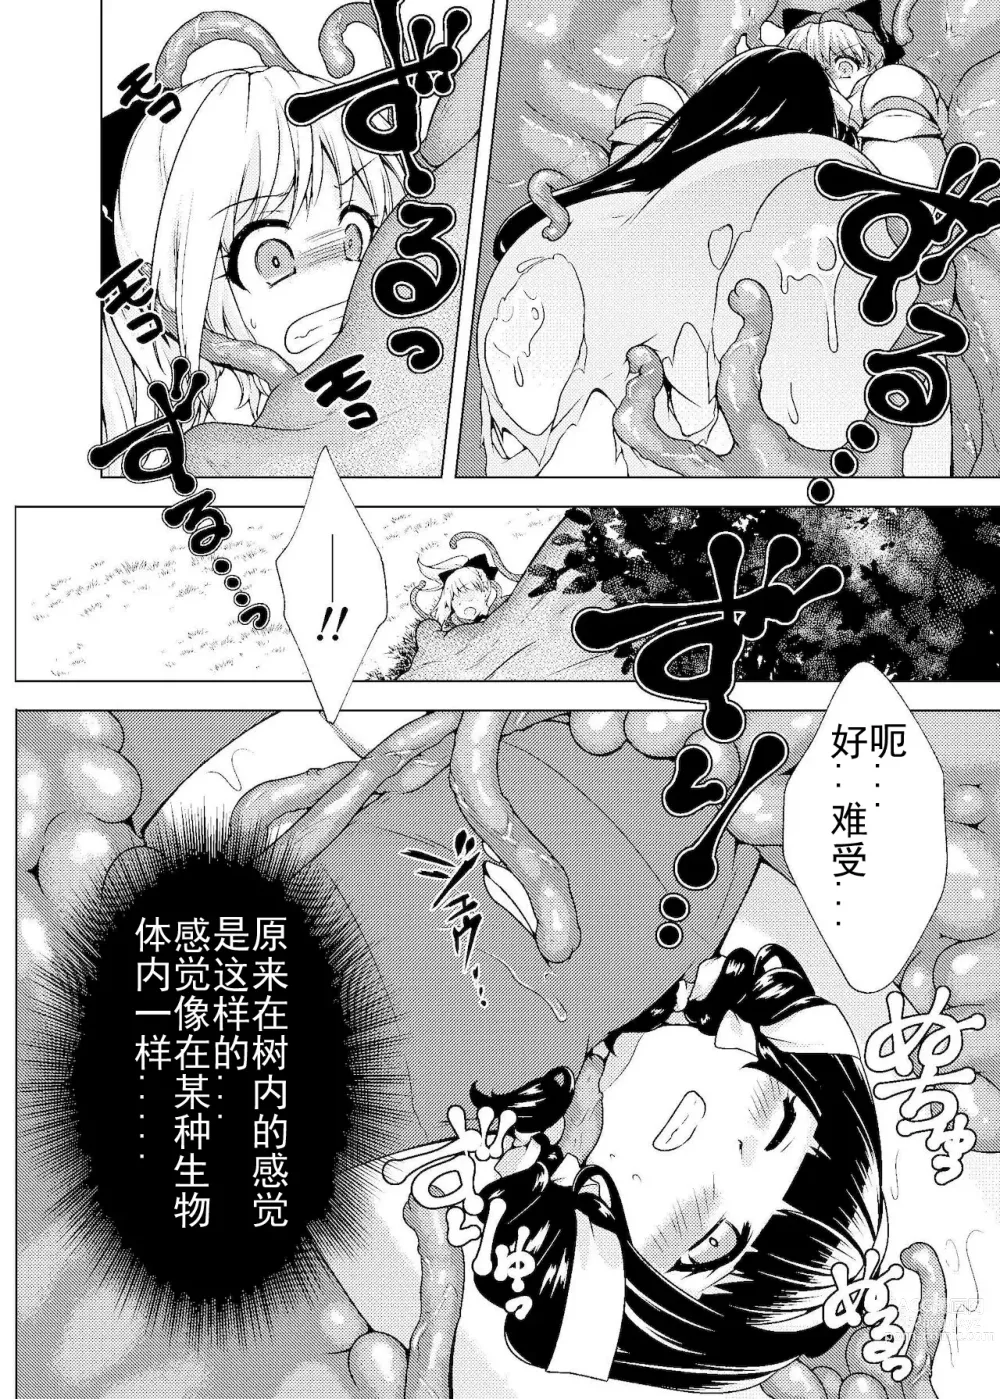 Page 7 of manga Nakayoshi Boukensha no Marunomi Haiboku End